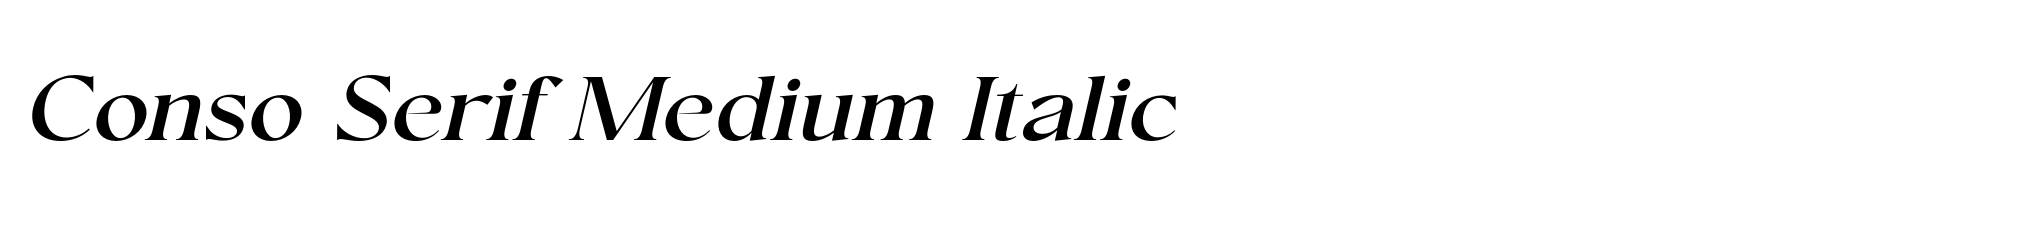 Conso Serif Medium Italic image